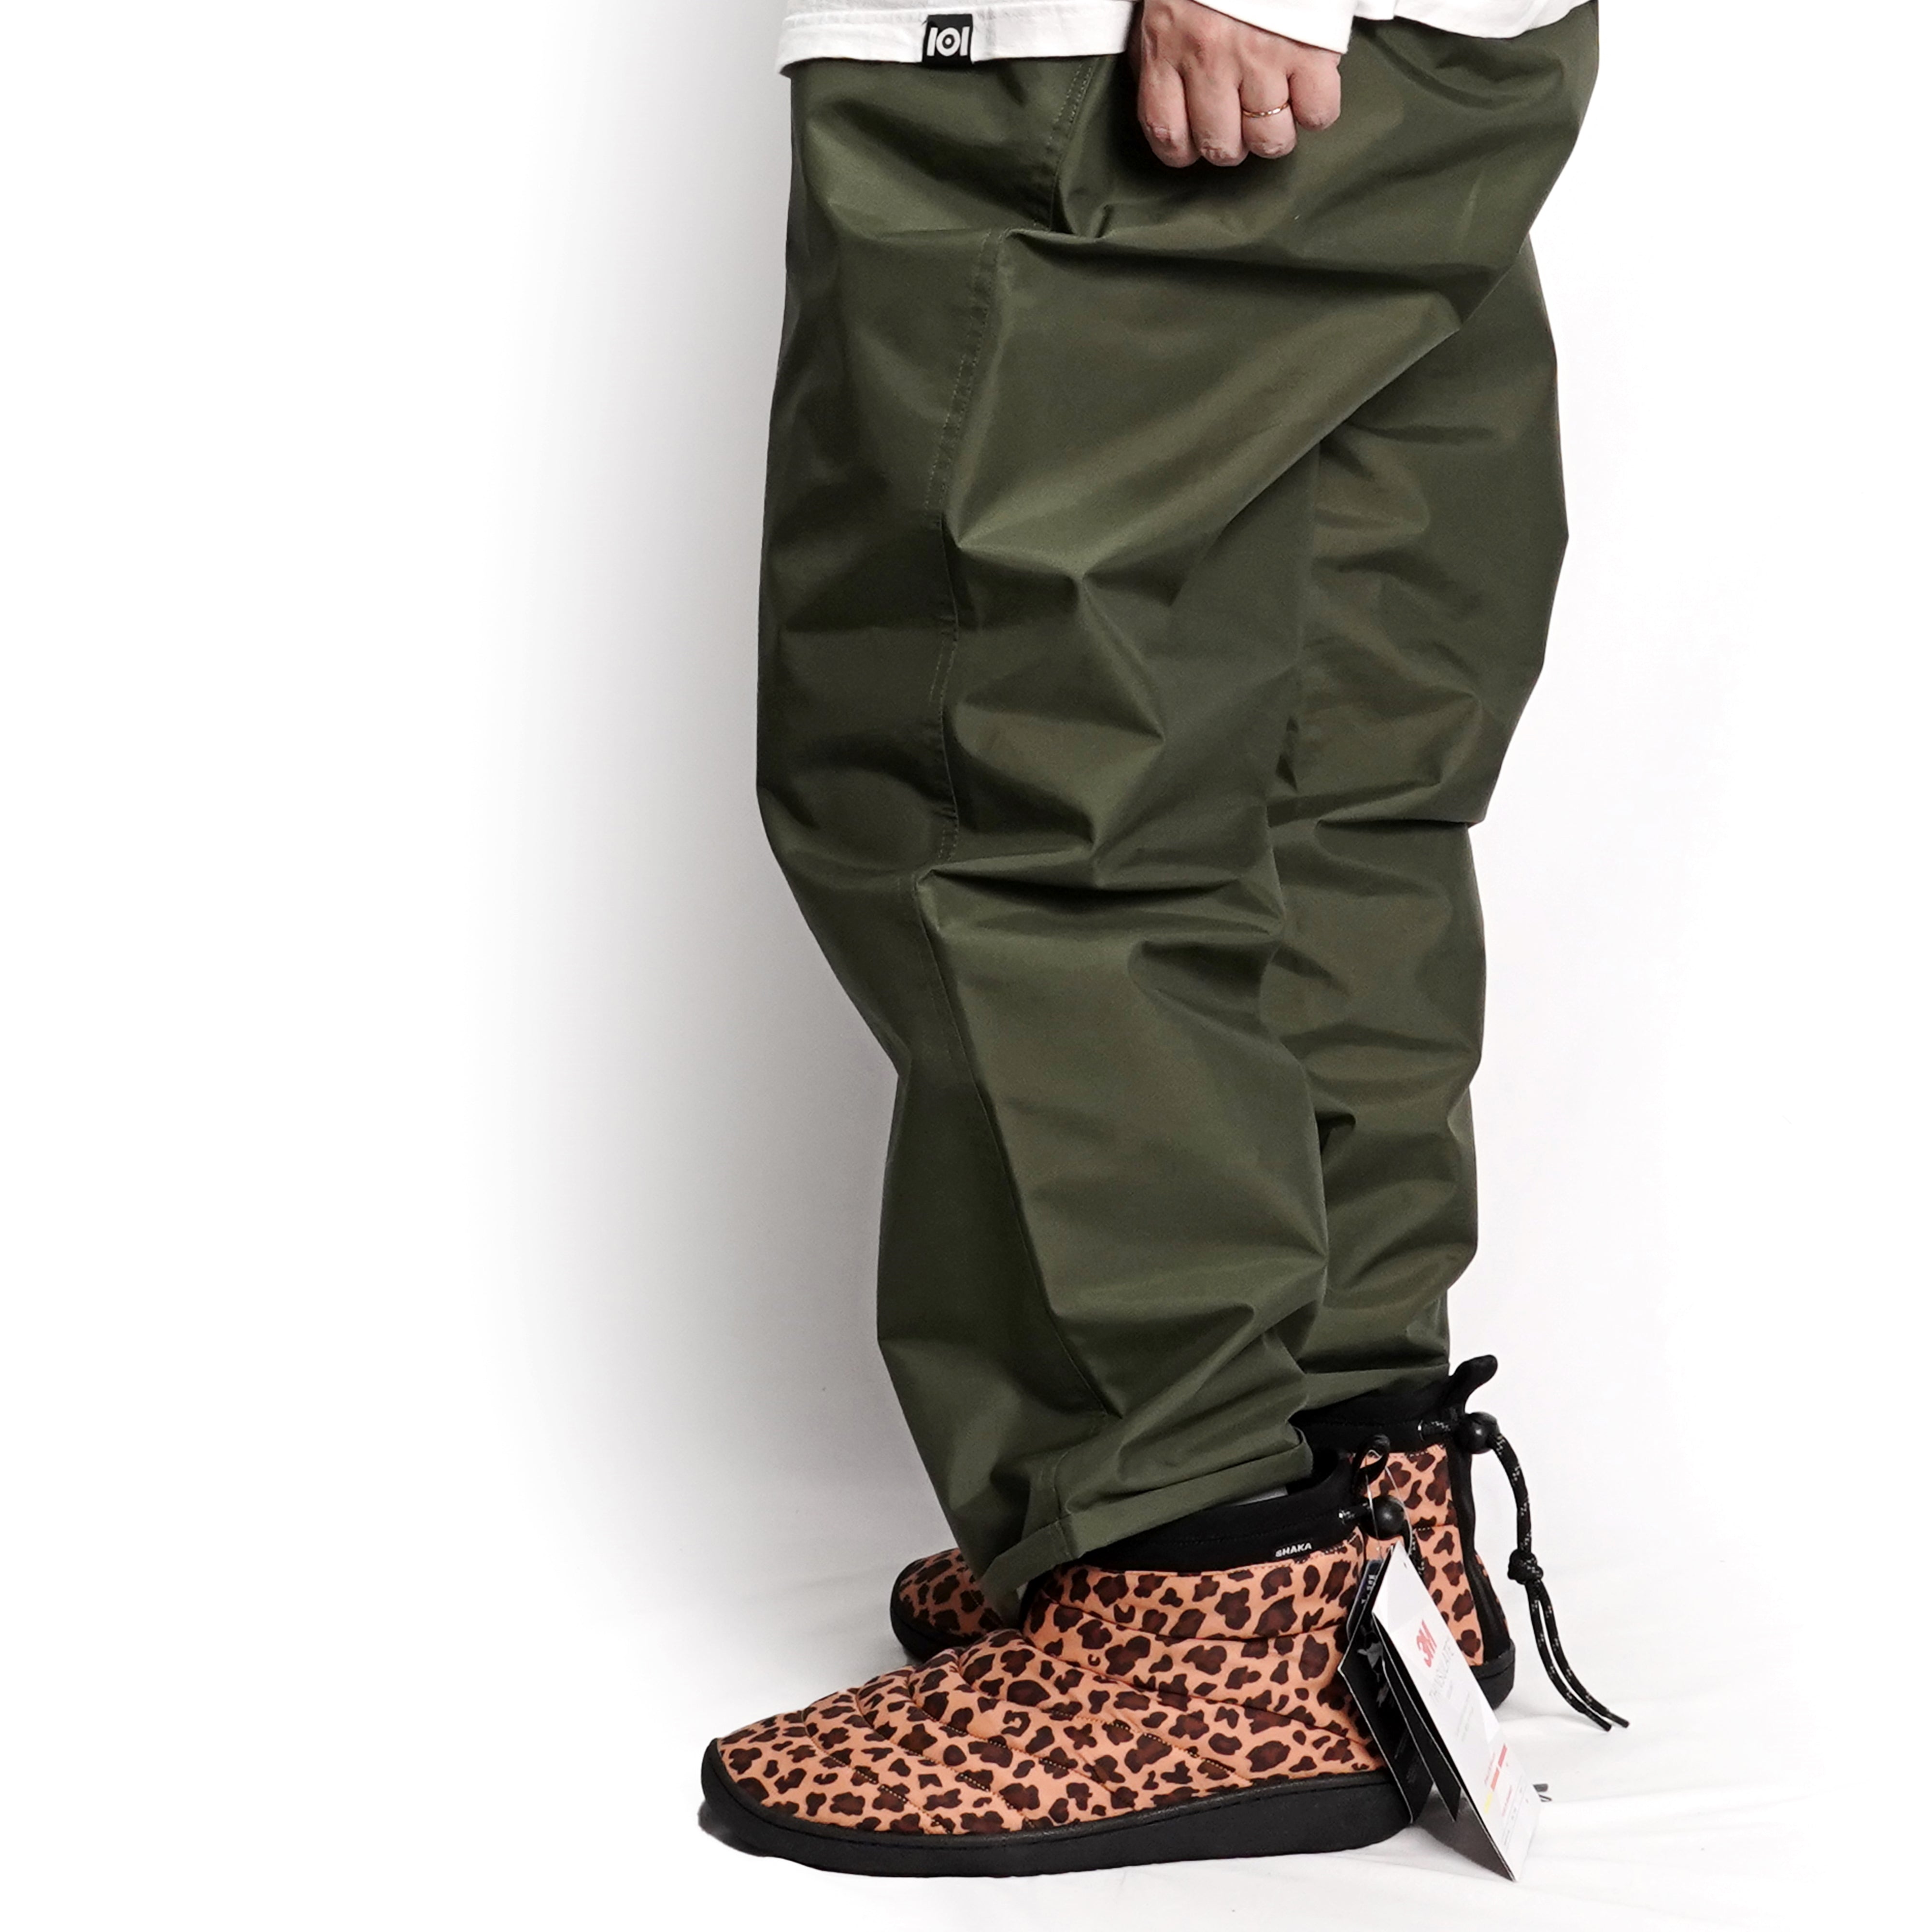 NO:433168 | Name:SCHLAF BOOTIE | Color:Leopard | Style:【SHAKA】-SHAKA-ADDICTION FUKUOKA